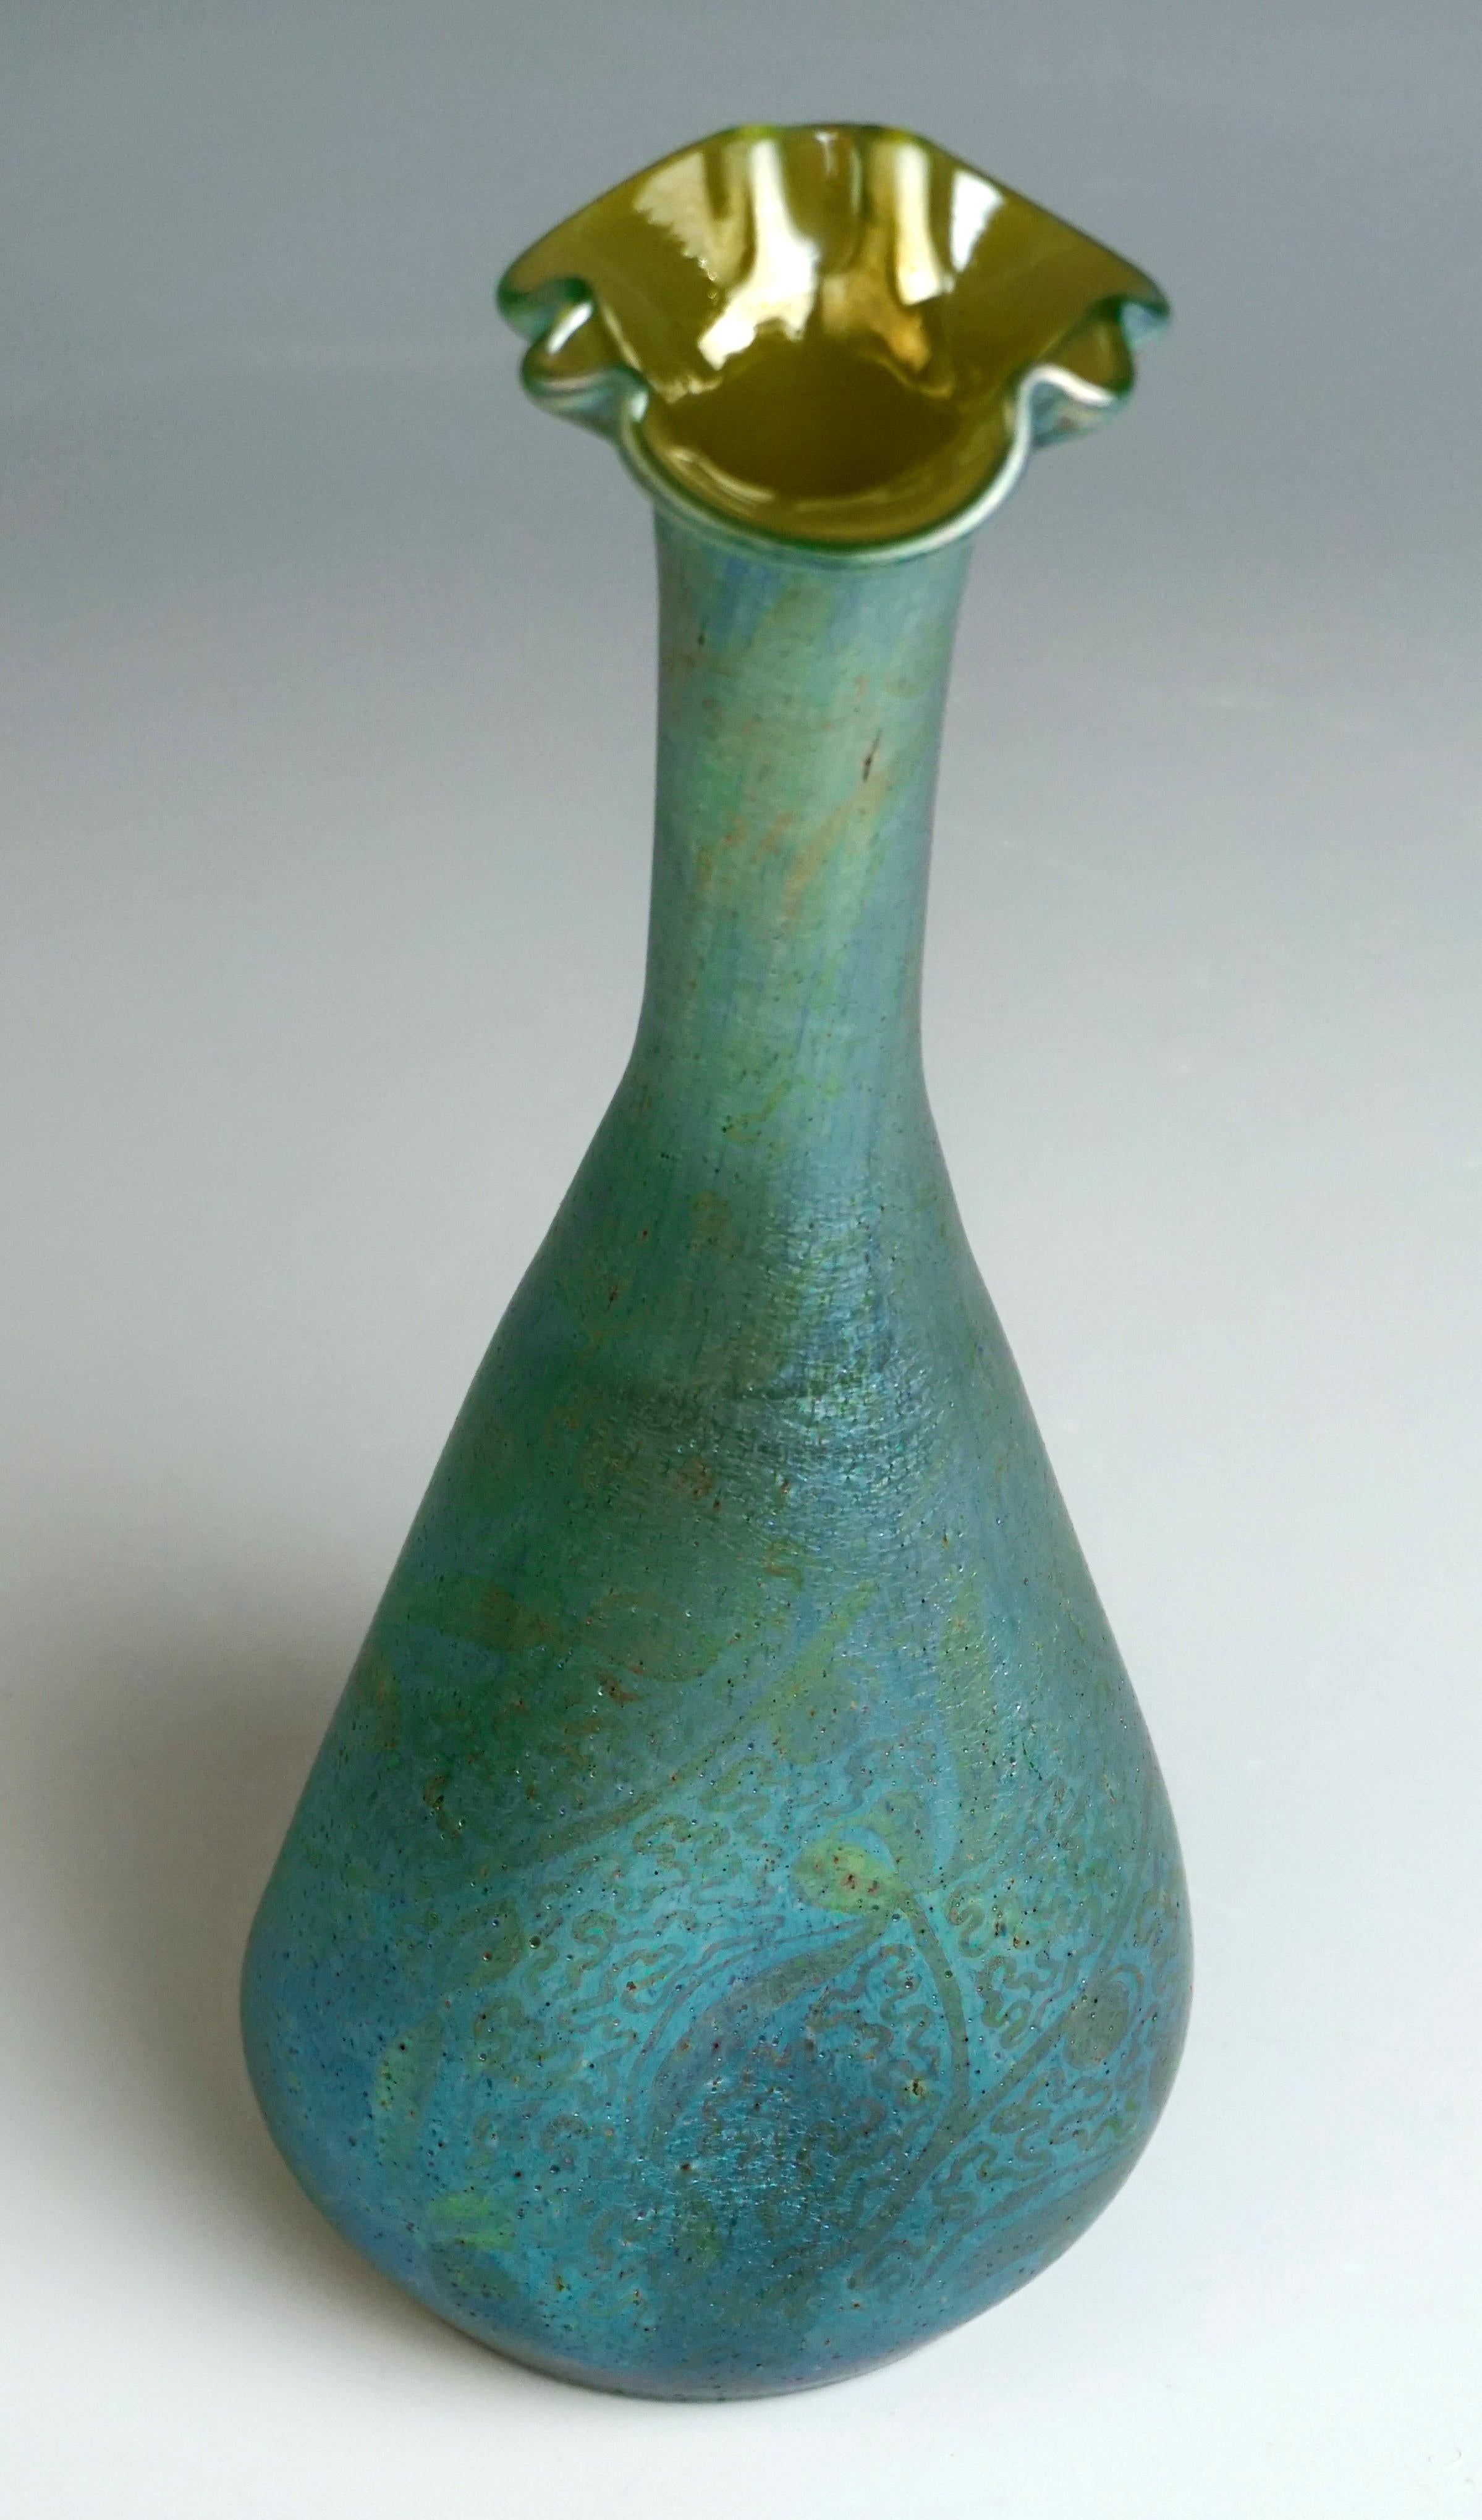 Hand-Crafted Loetz Art Nouveau Vase Phaenomen Mercur Iridescent with Etched Decor 1900